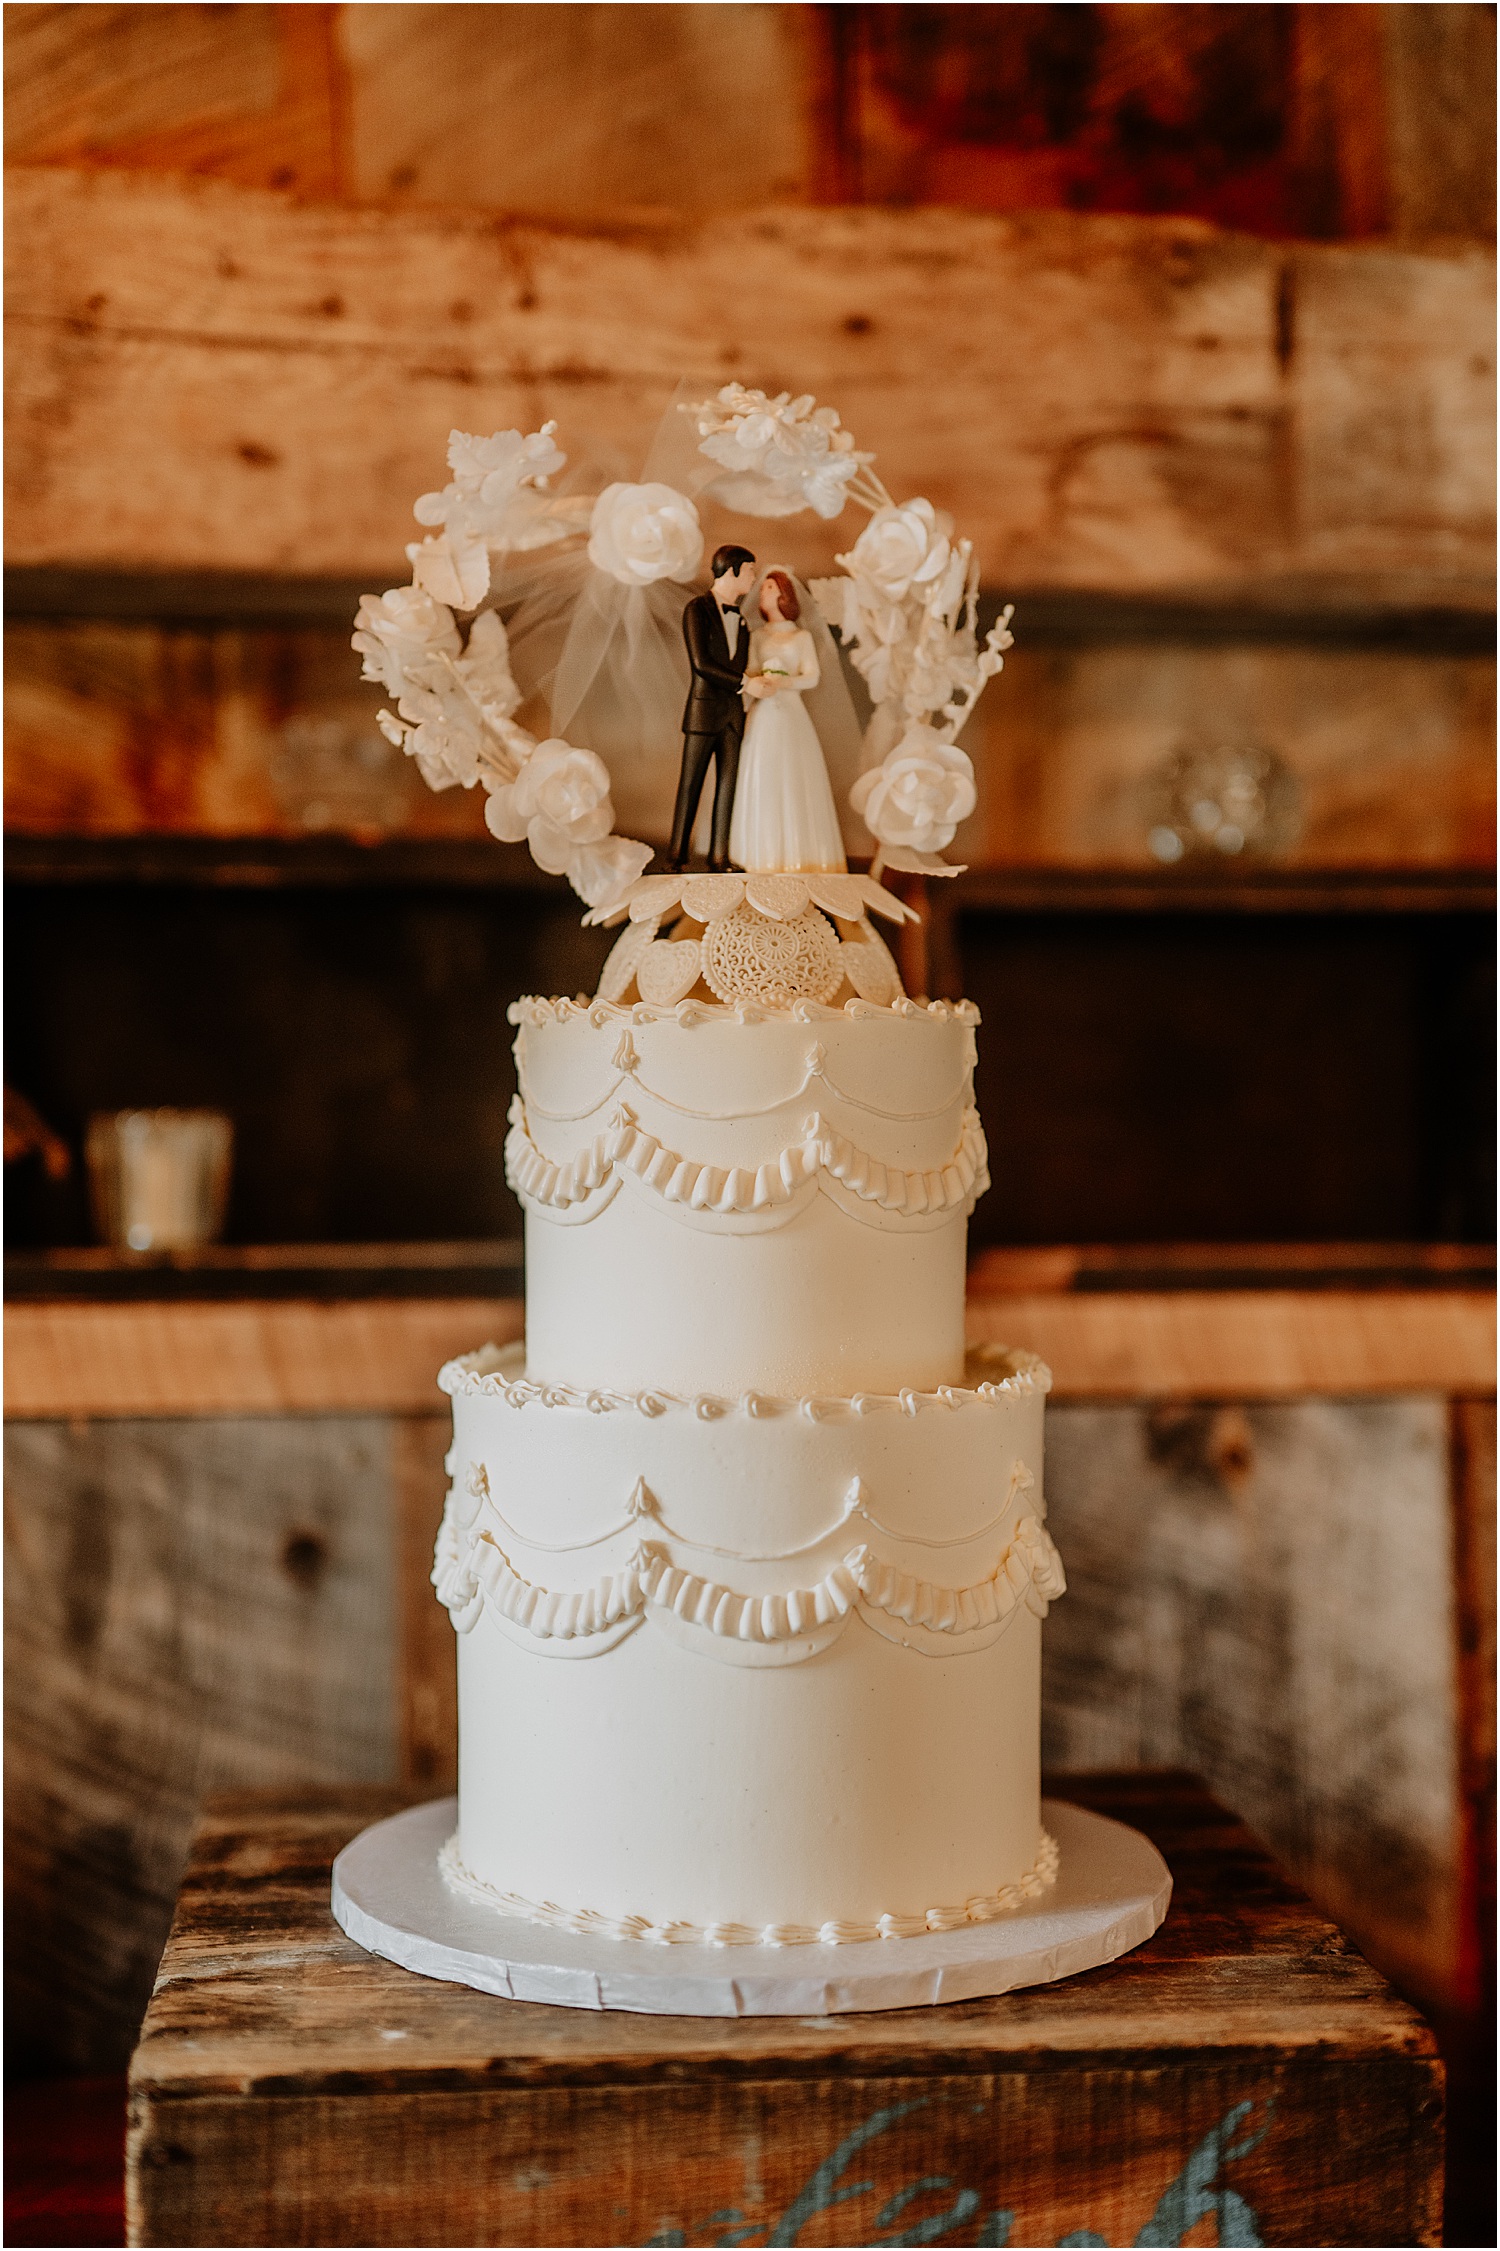 Stunning wedding cake at Caswell Farm 